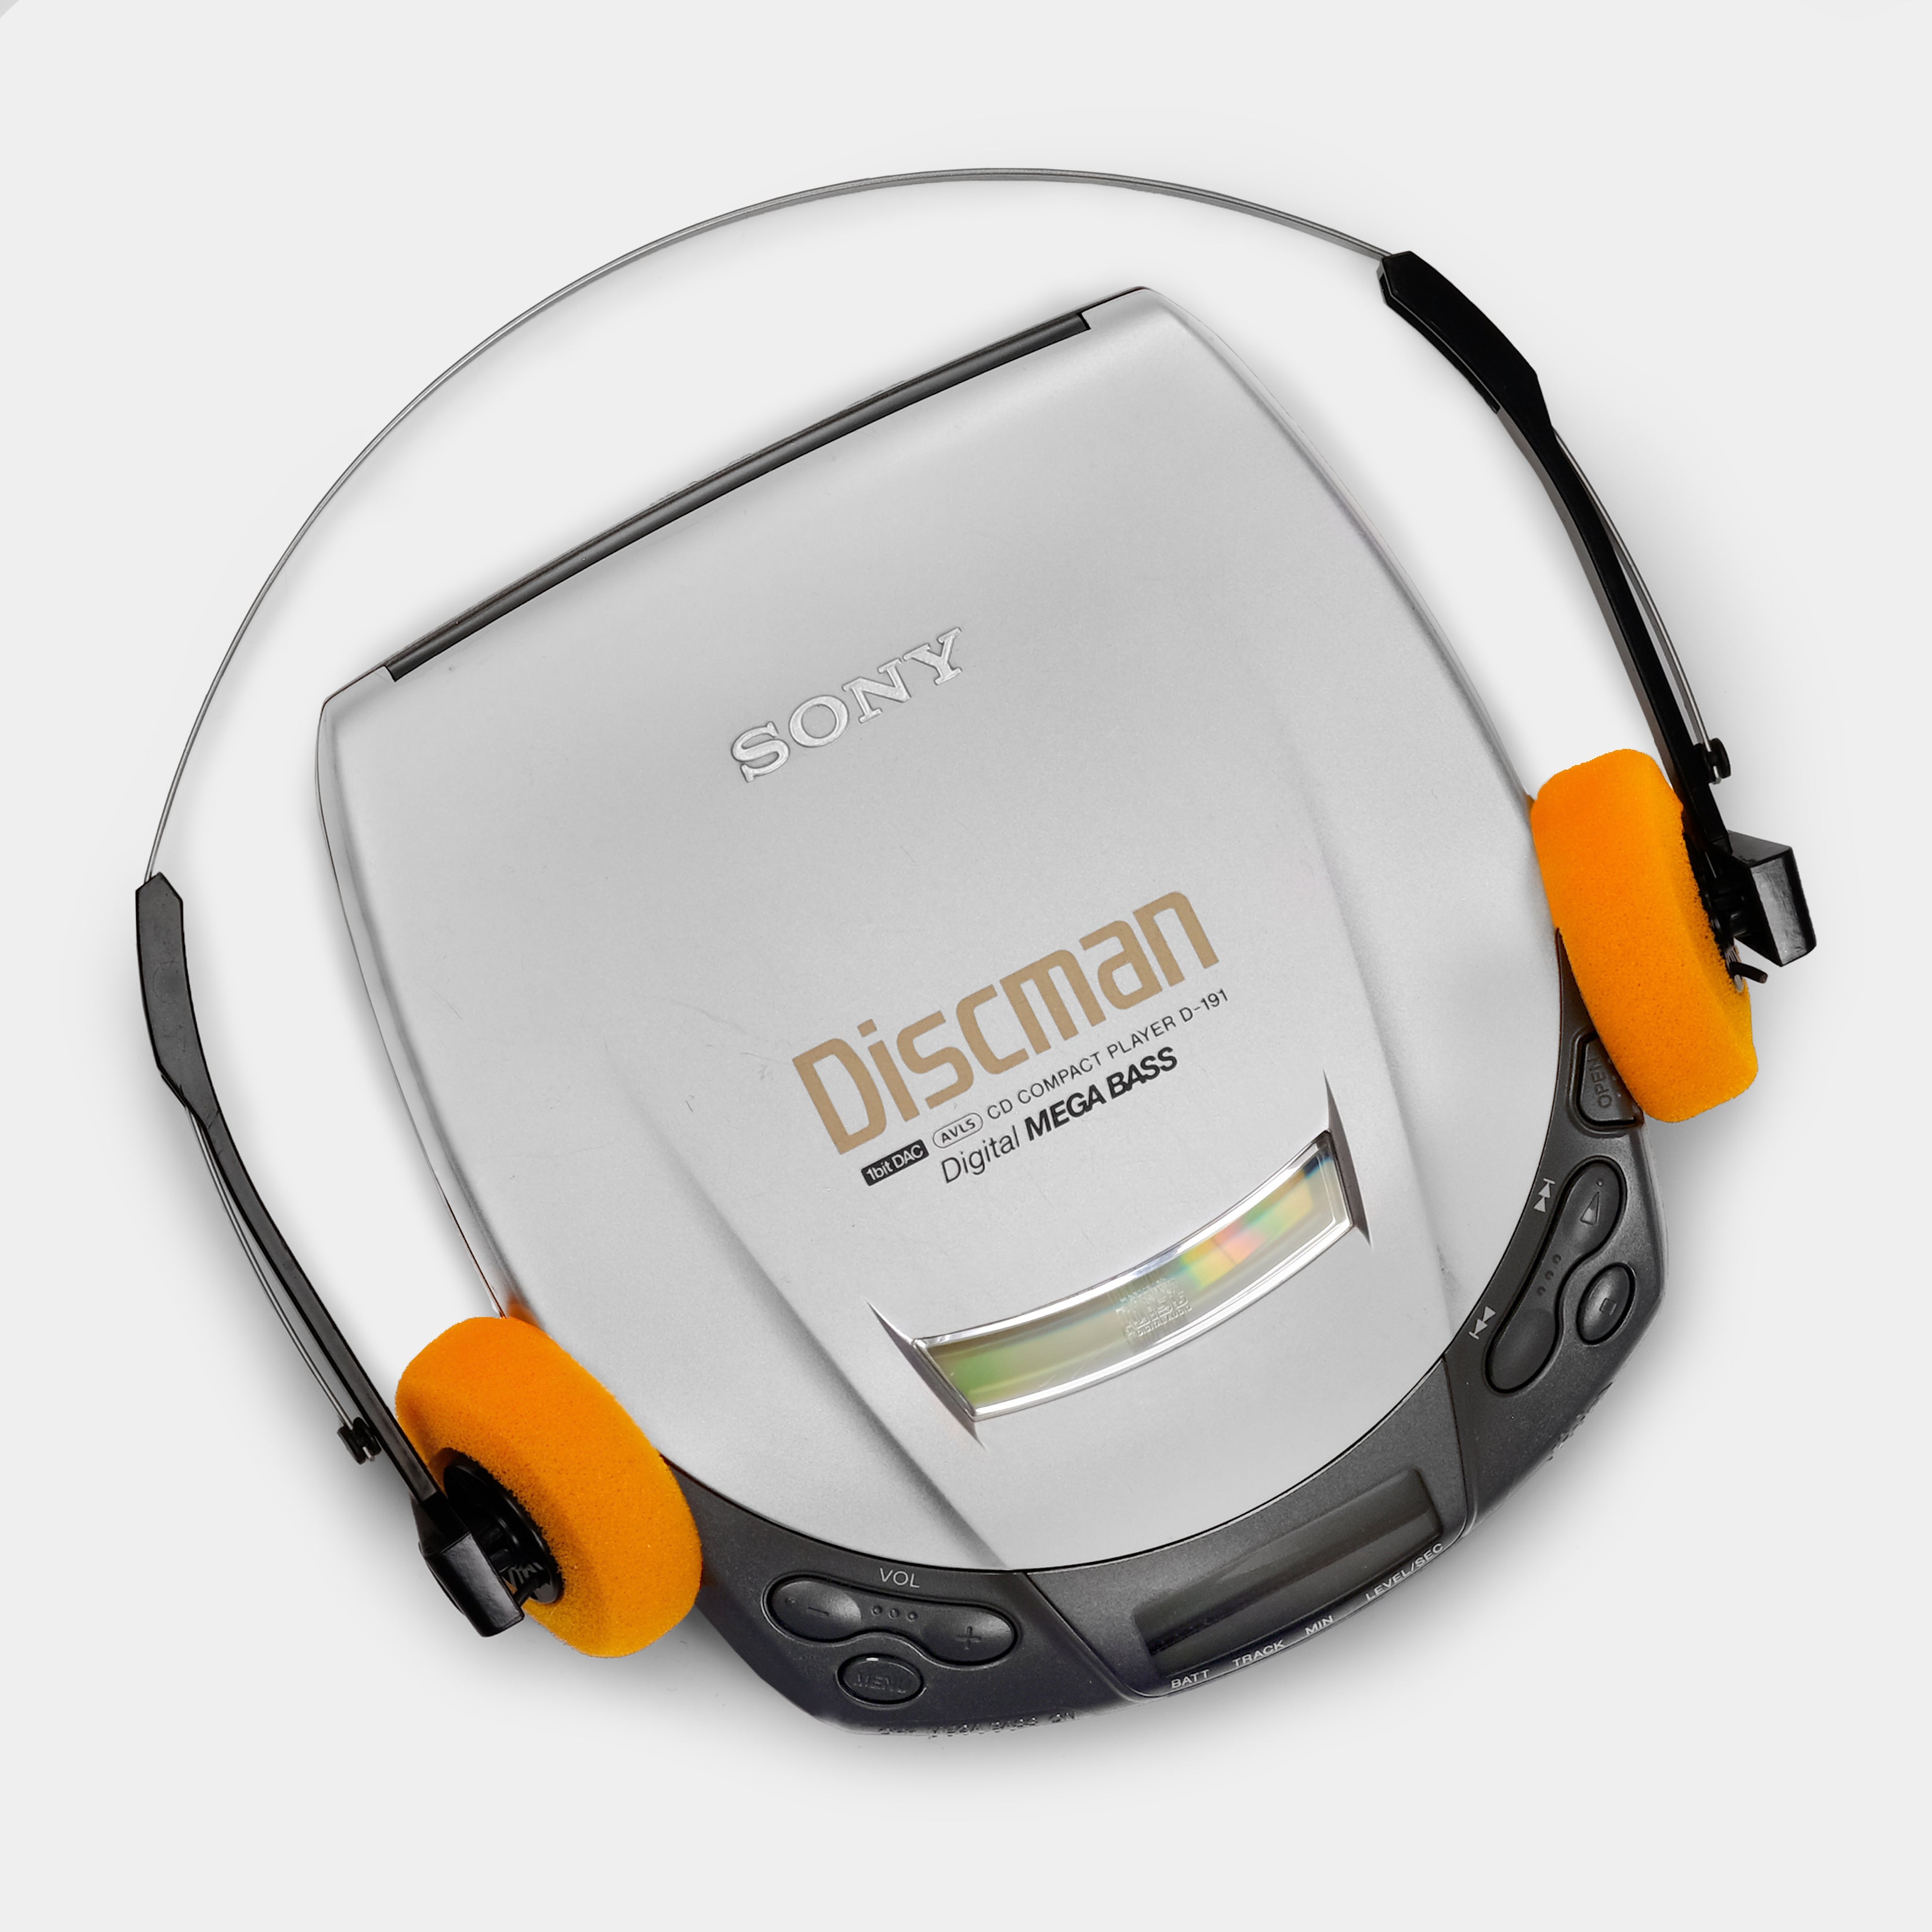 Sony Discman D-191 Portable CD Player